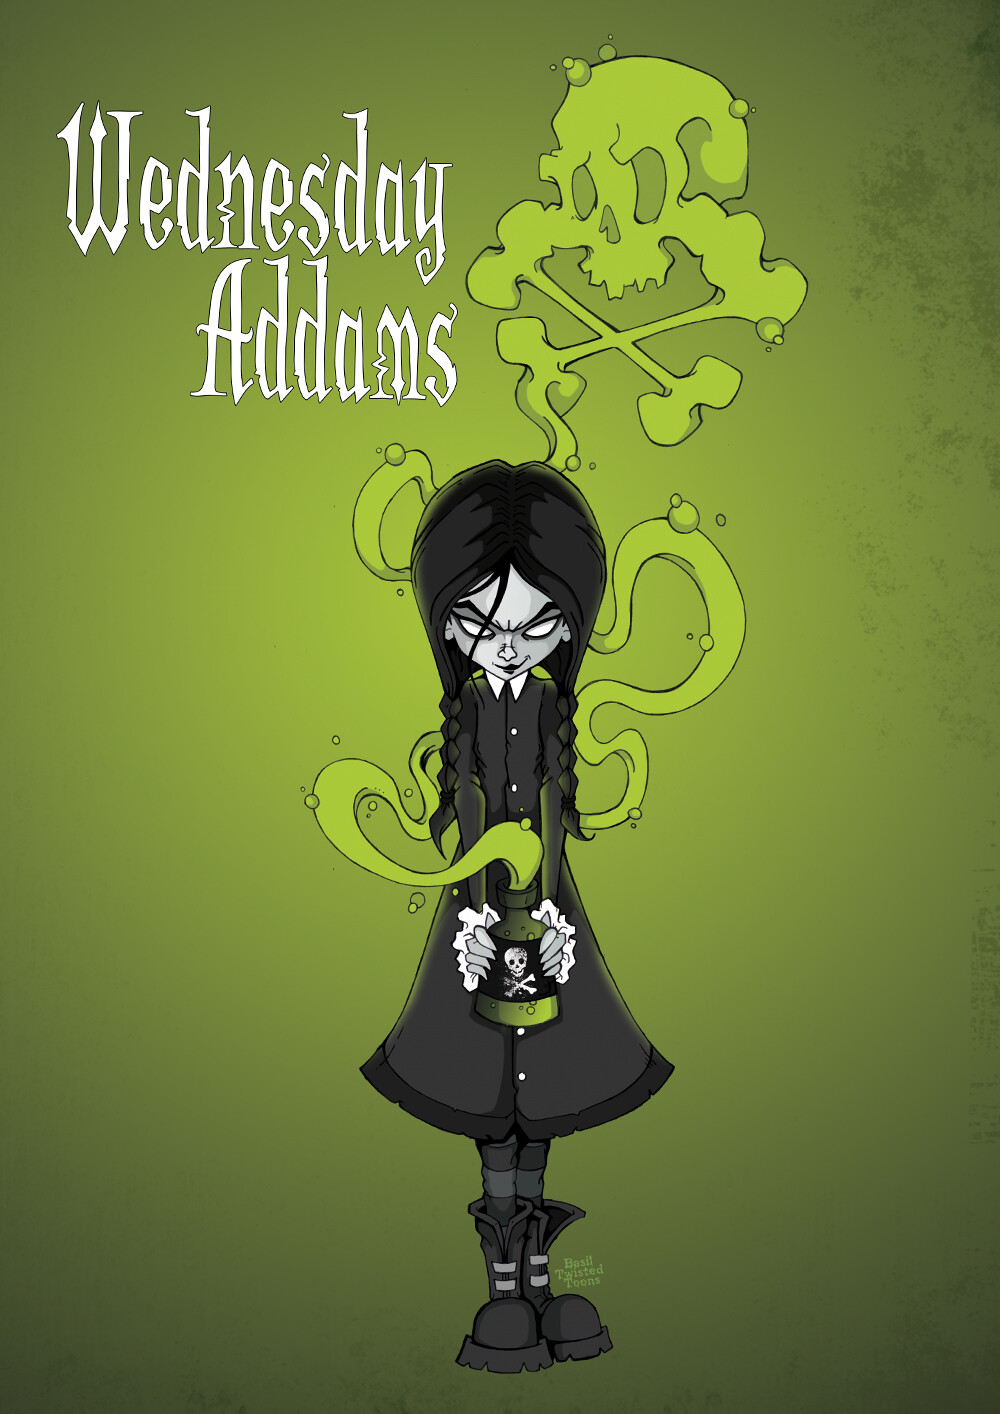 ArtStation - Wednesday Addams cartoons